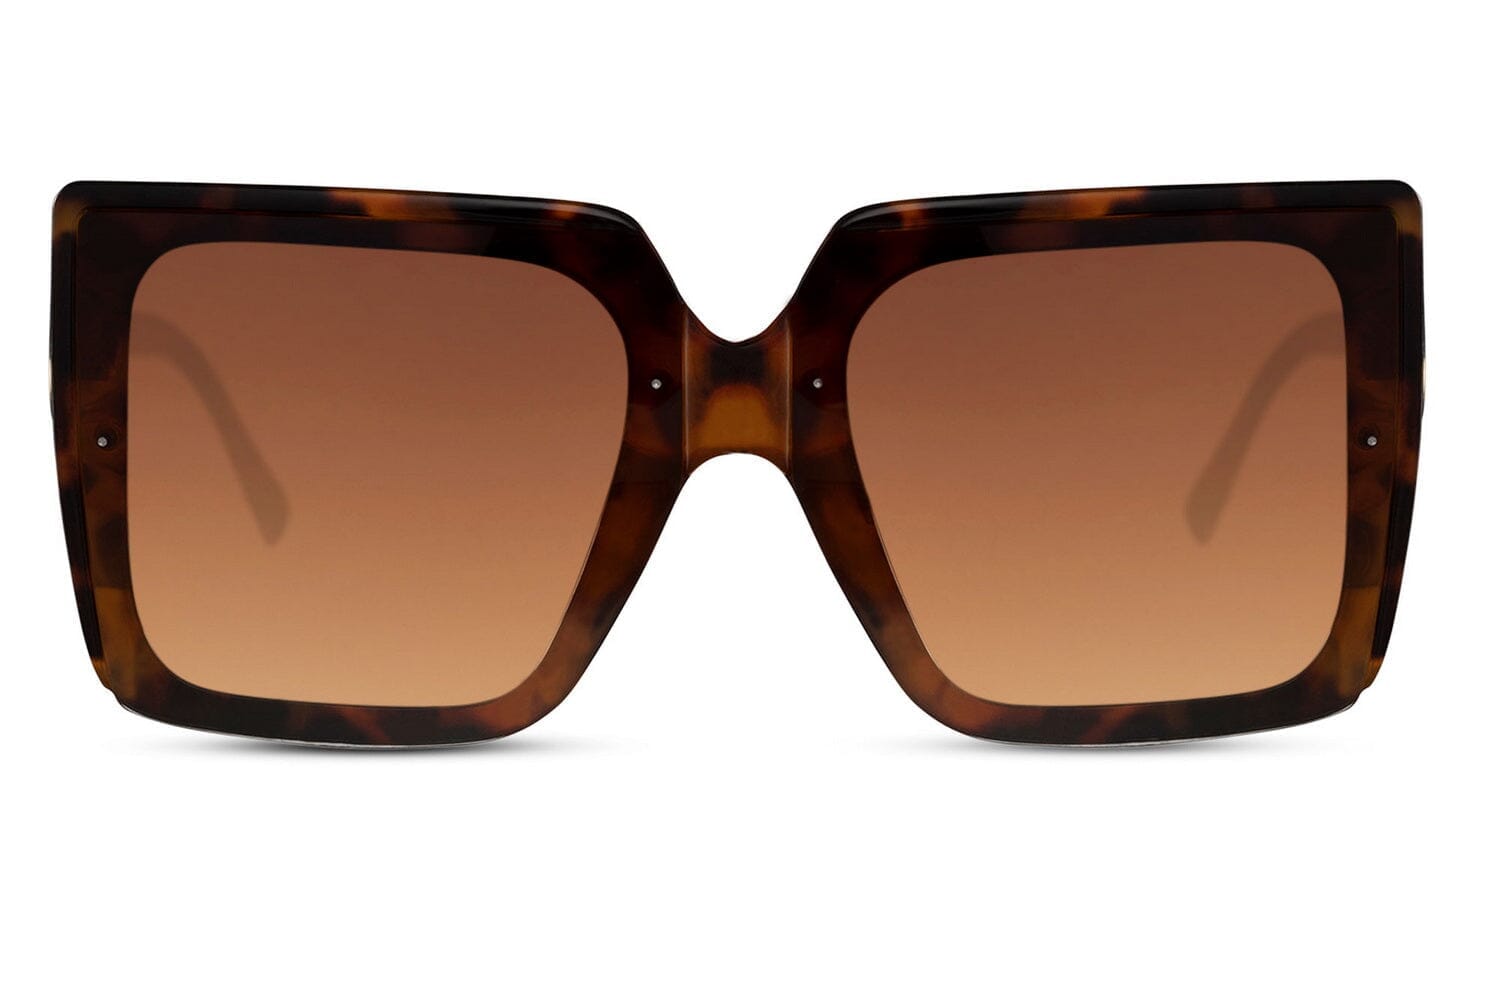 Large square sunglasses. UV400 protected. Acetate frames.